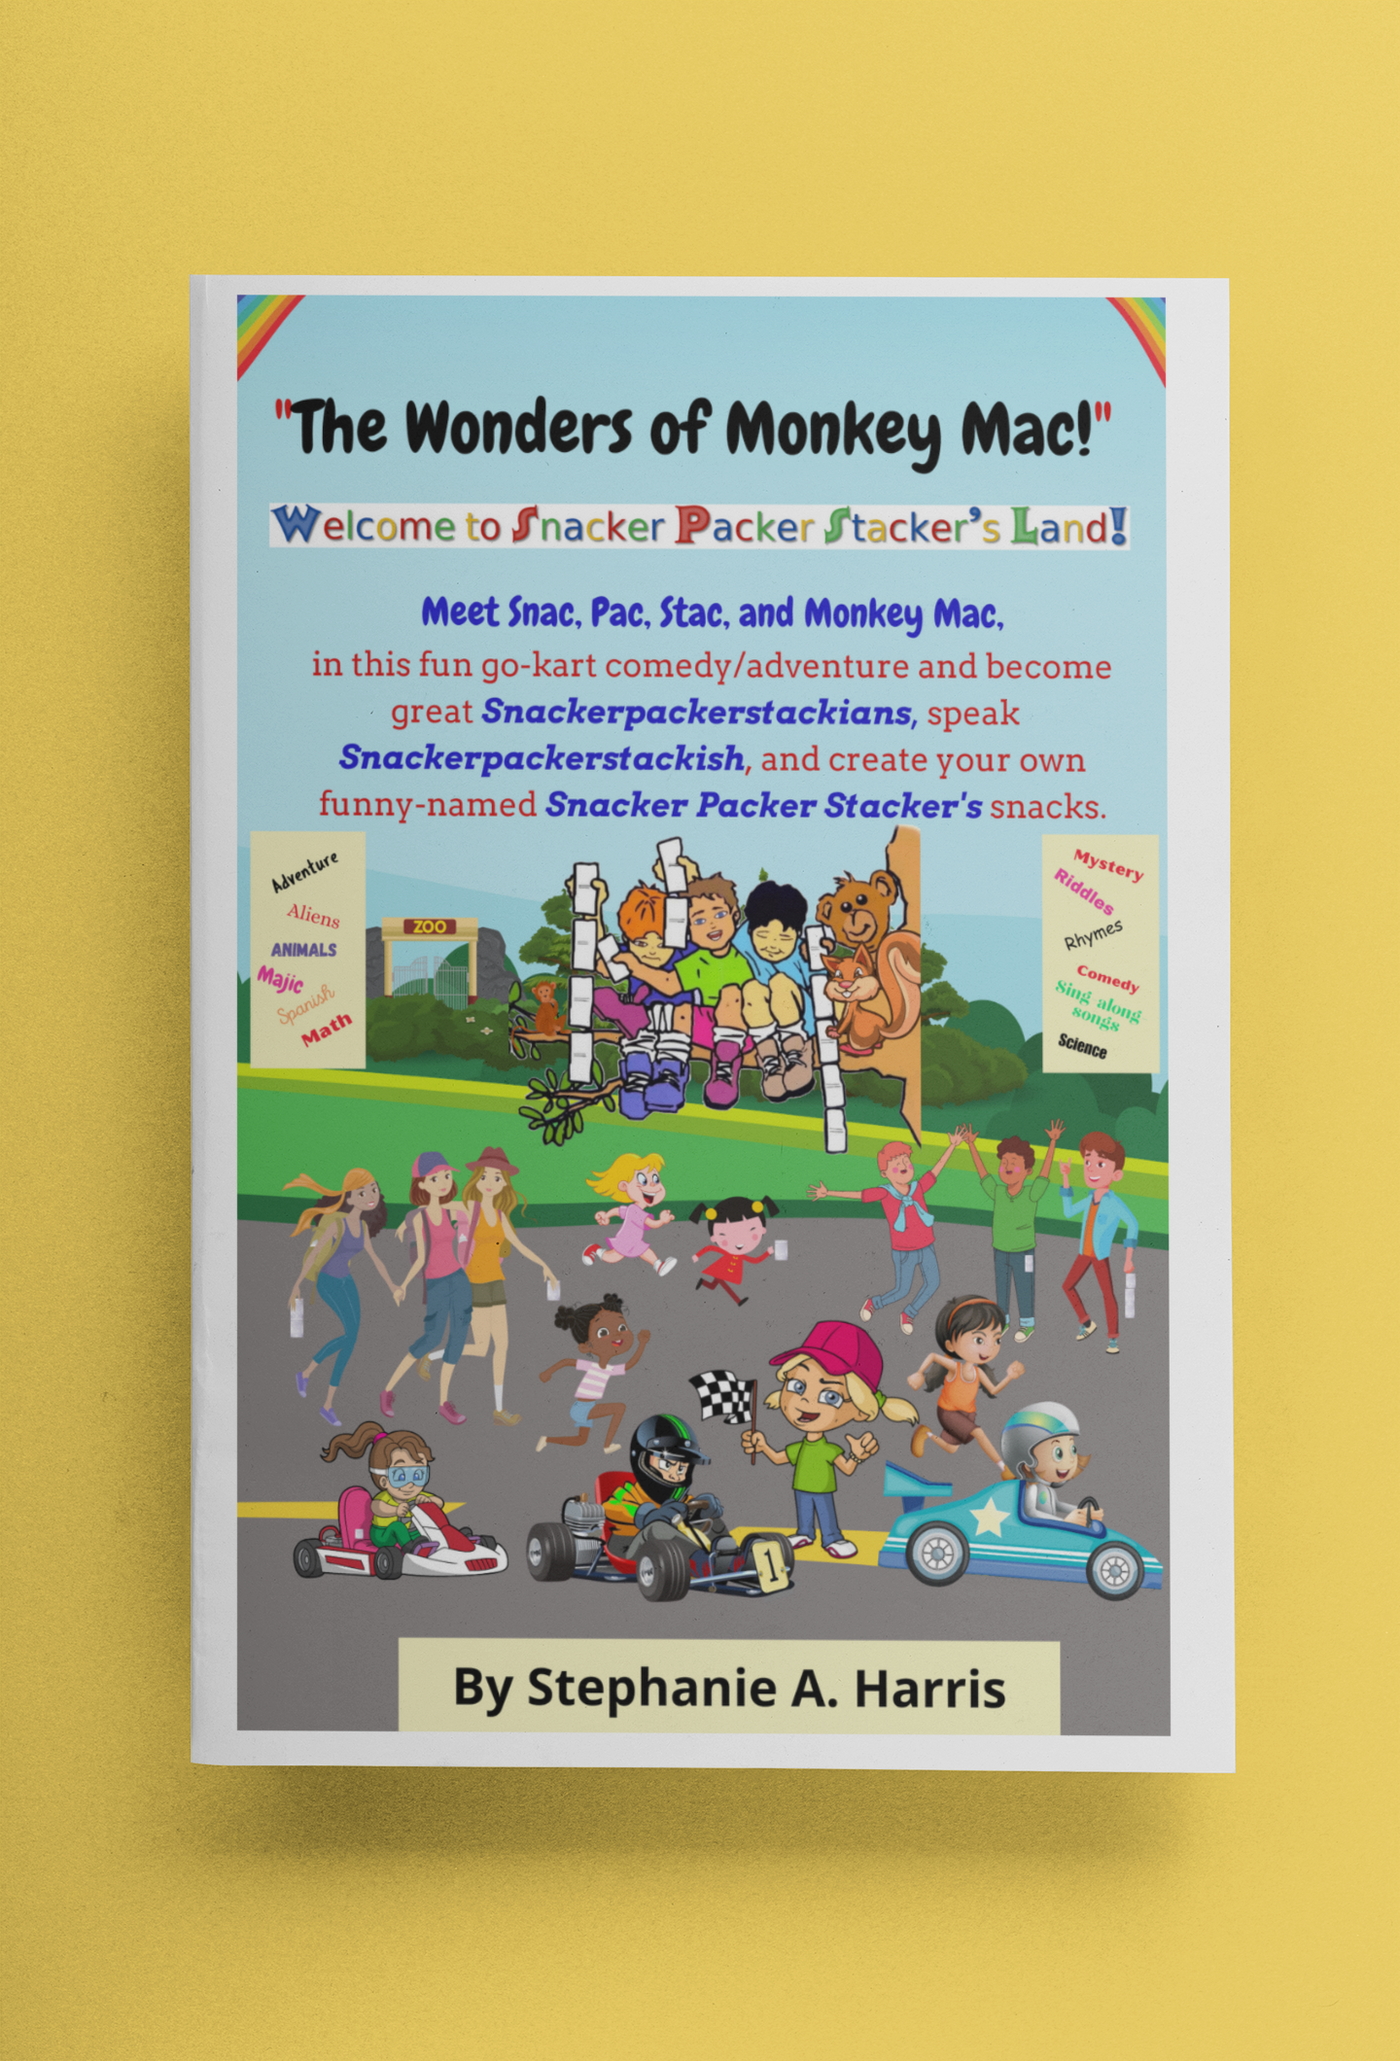 The Wonders of Monkey!